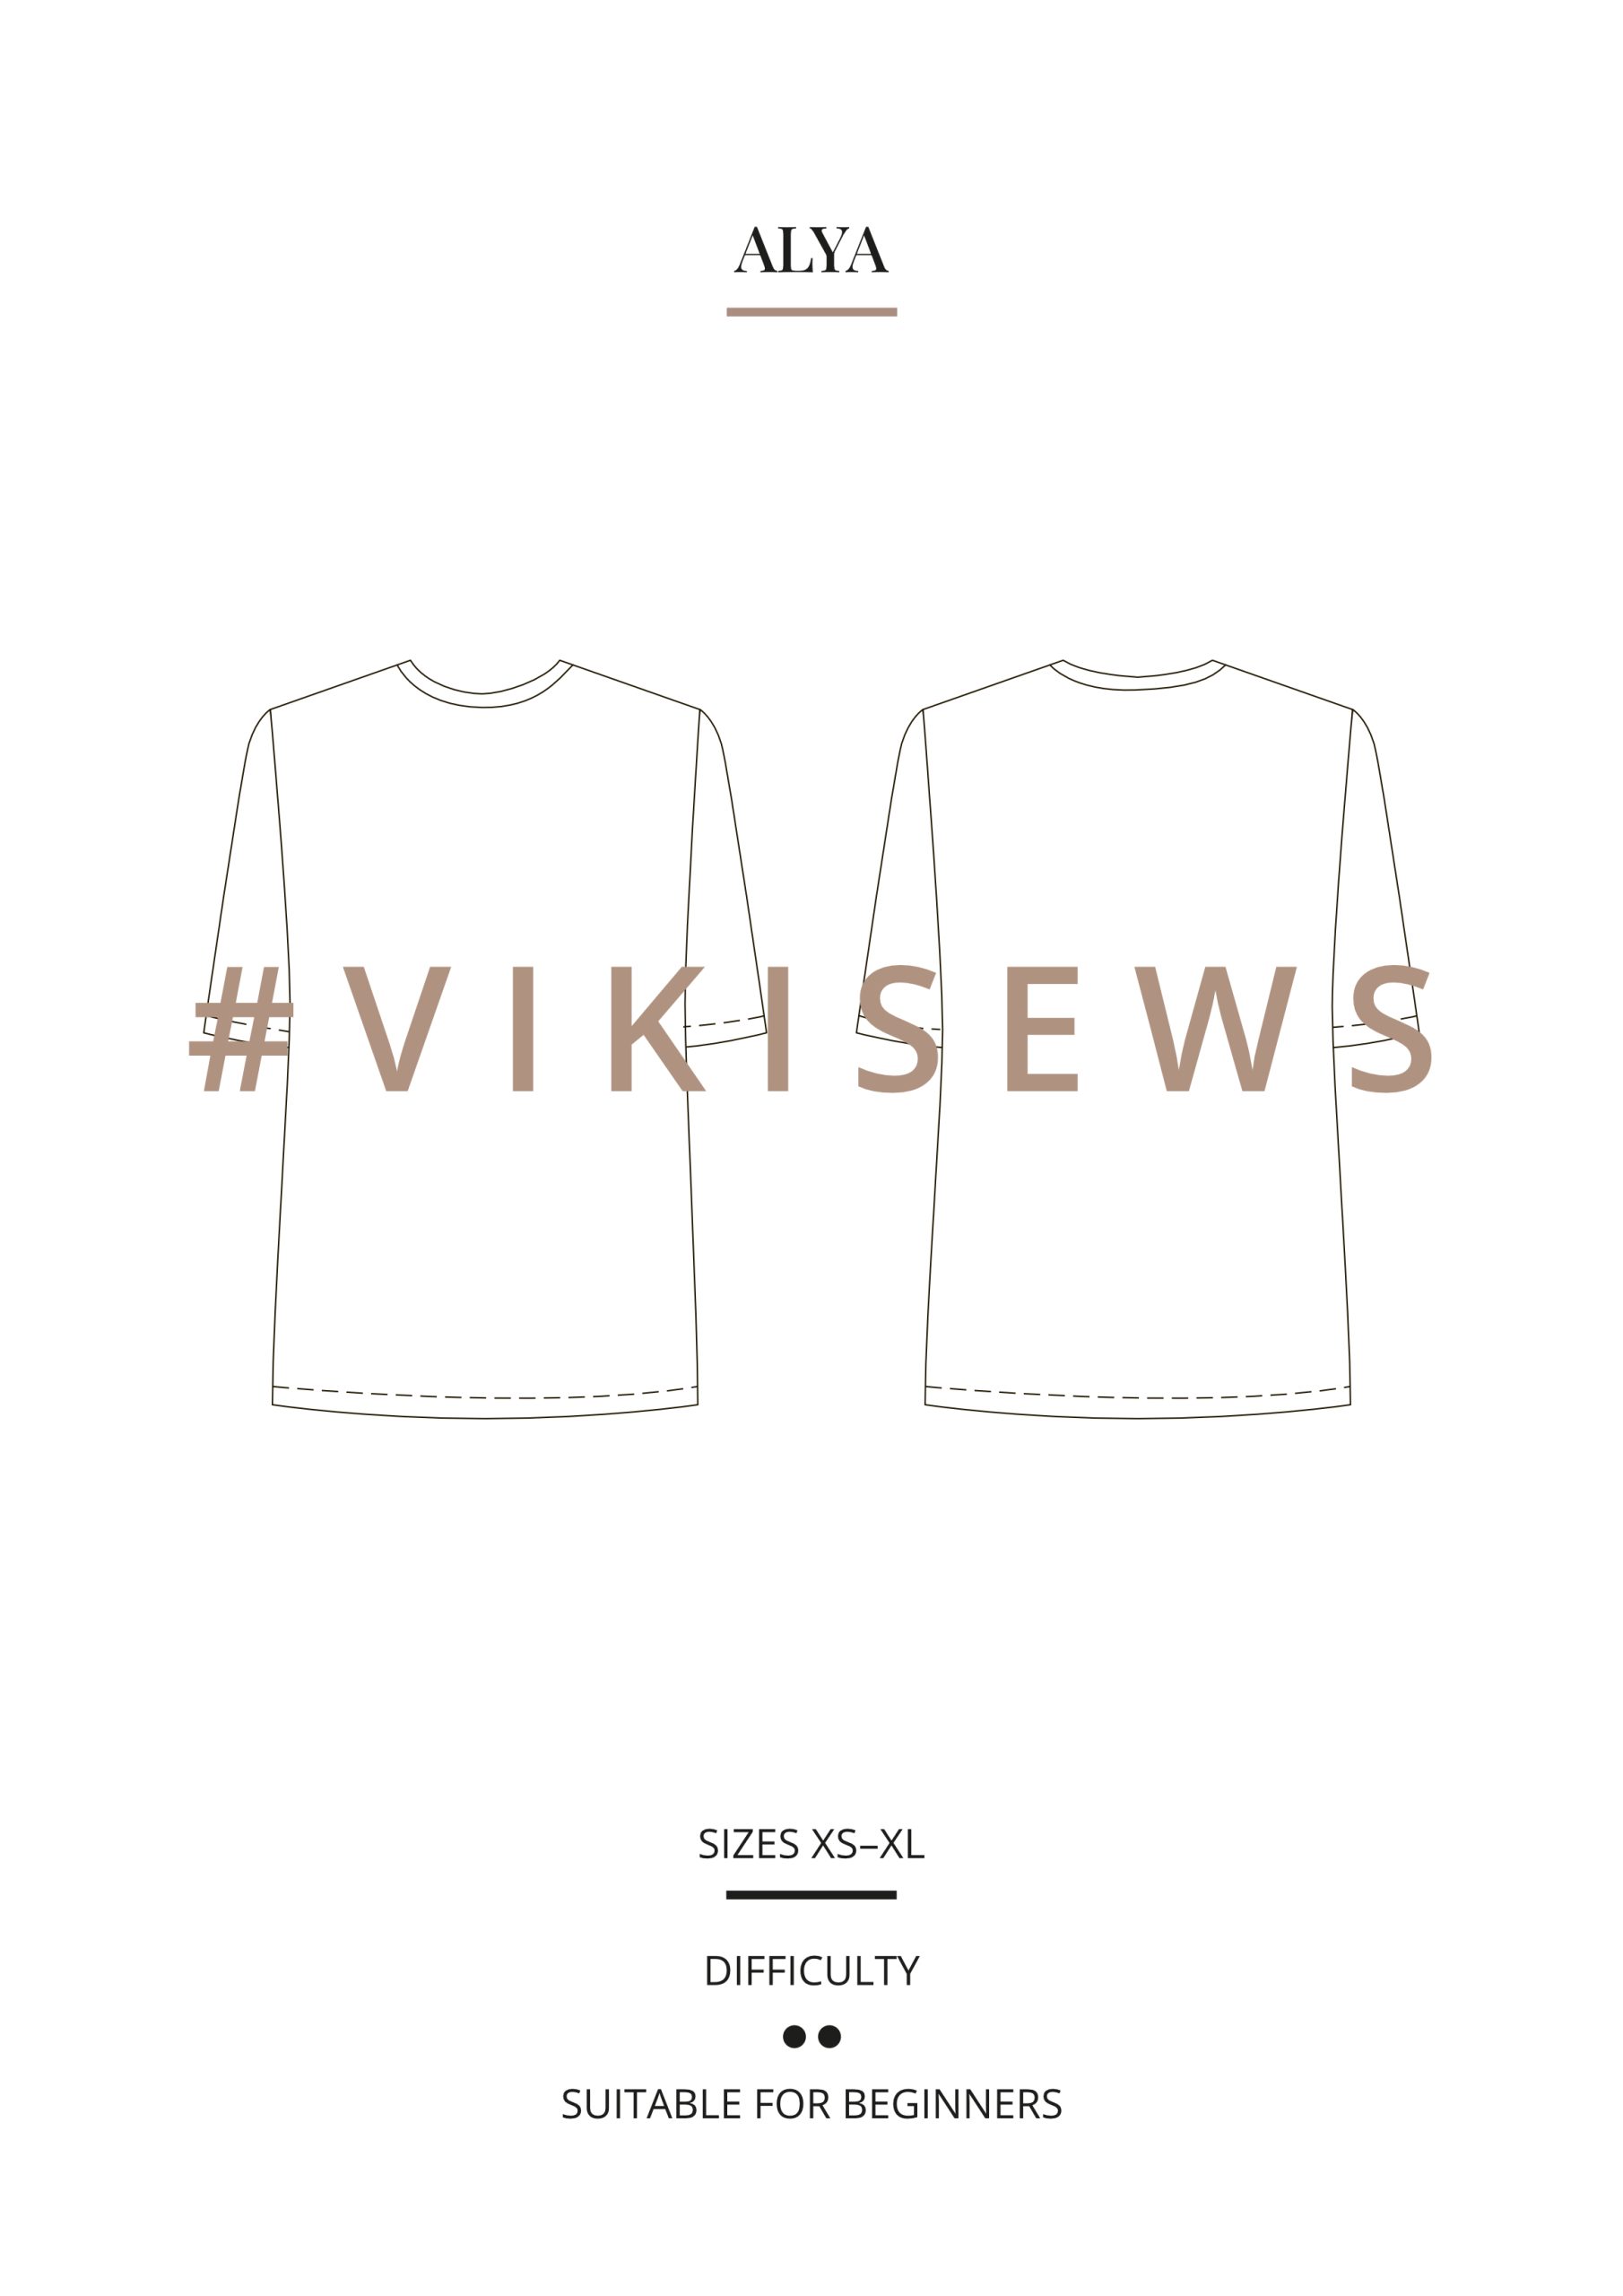 Vikisews Alya T-shirt PDF